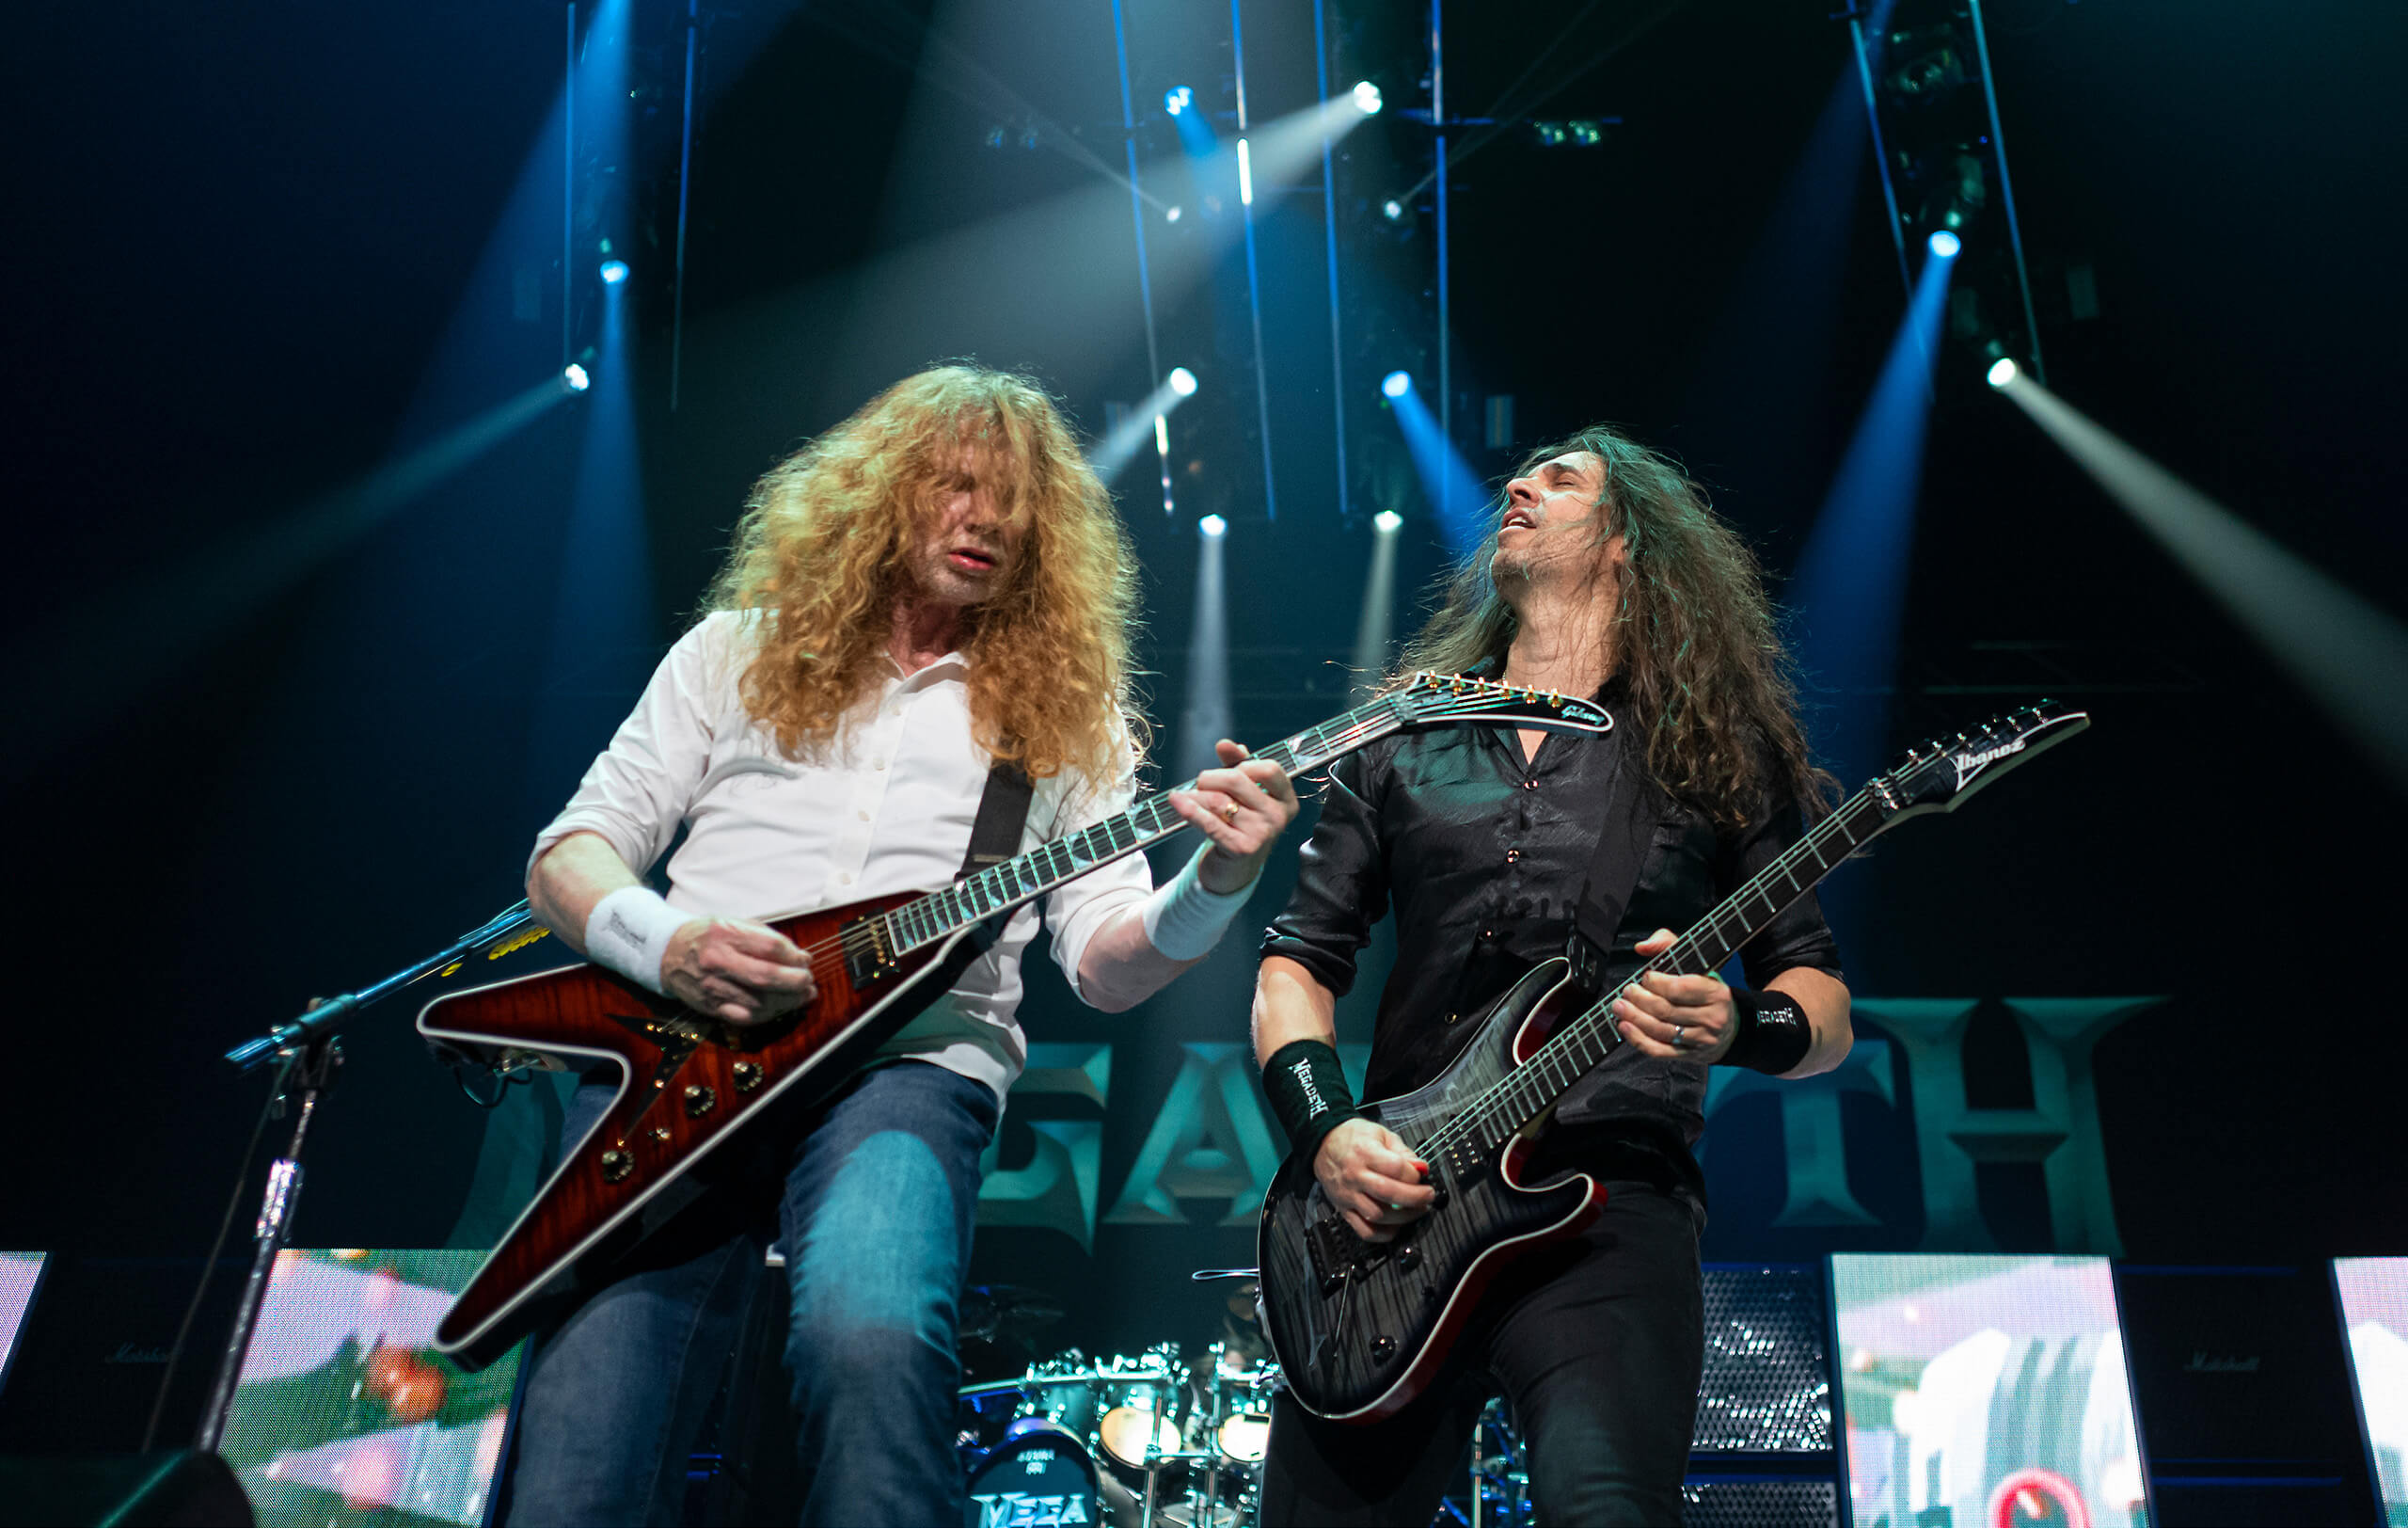 Dave Mustaine and Kiko Loureiro of Megadeth